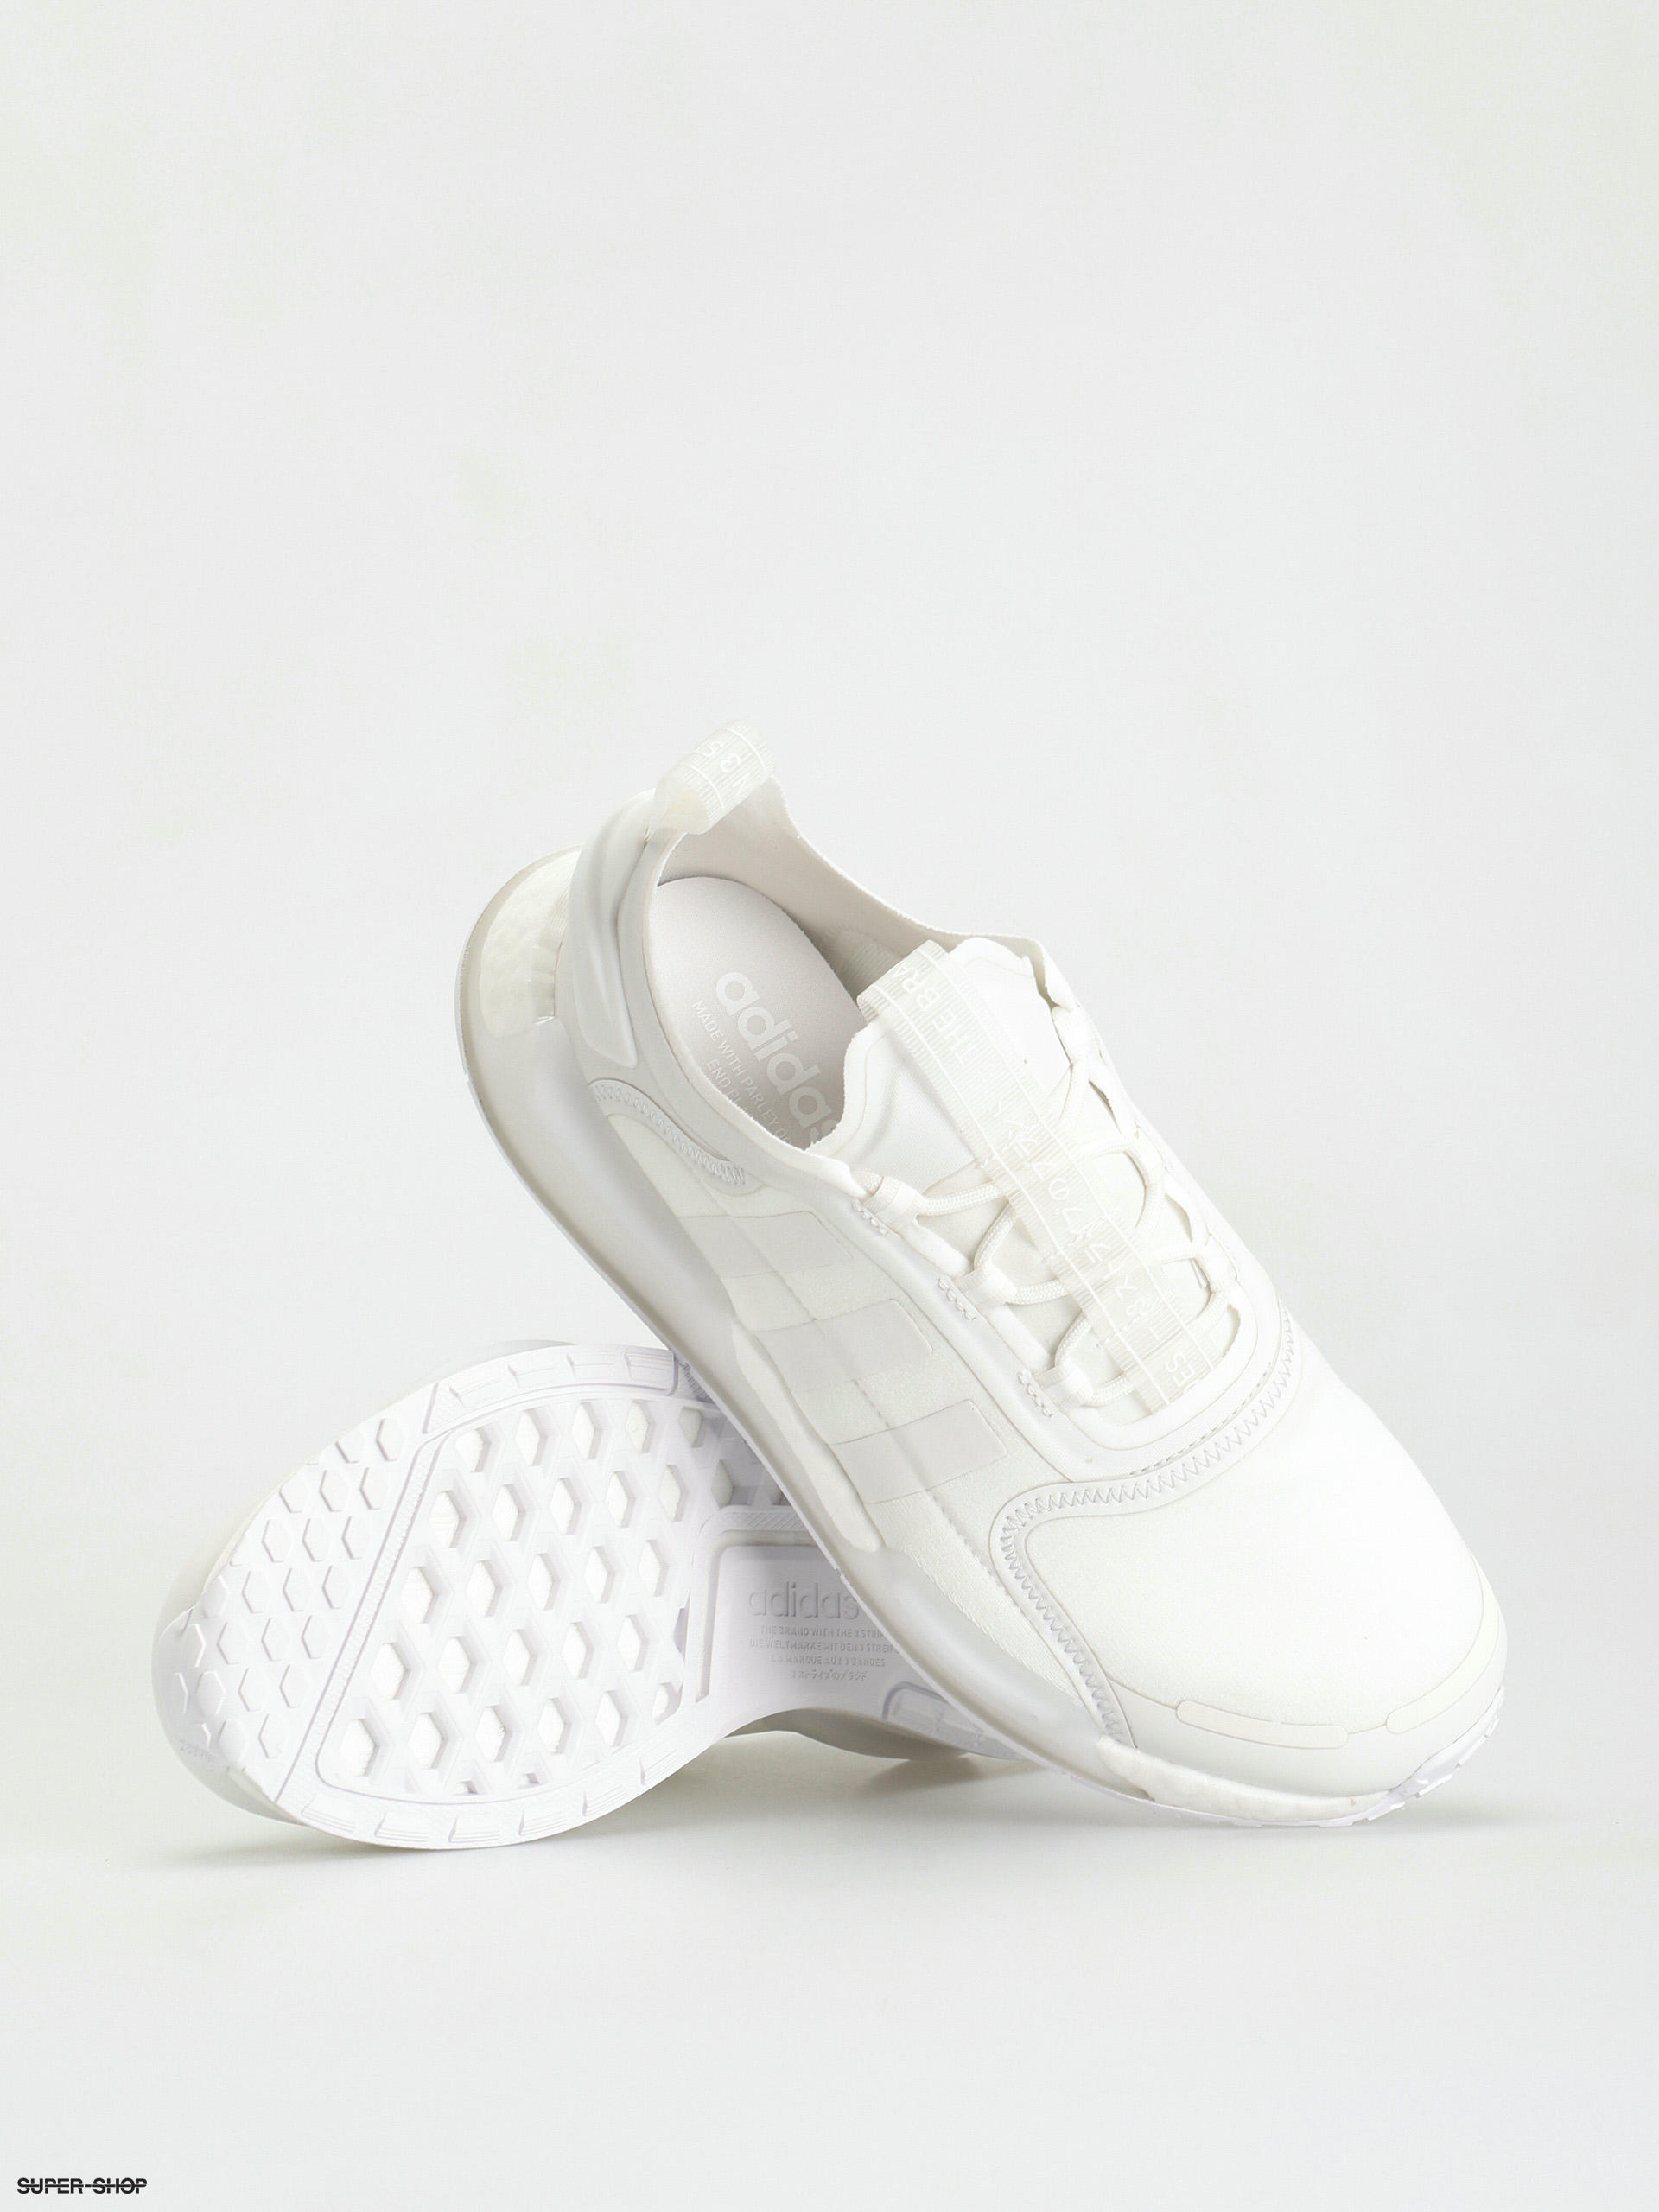 Schuhe (ftwwht/ftwwht/ftwwht) Nmd V3 Originals adidas